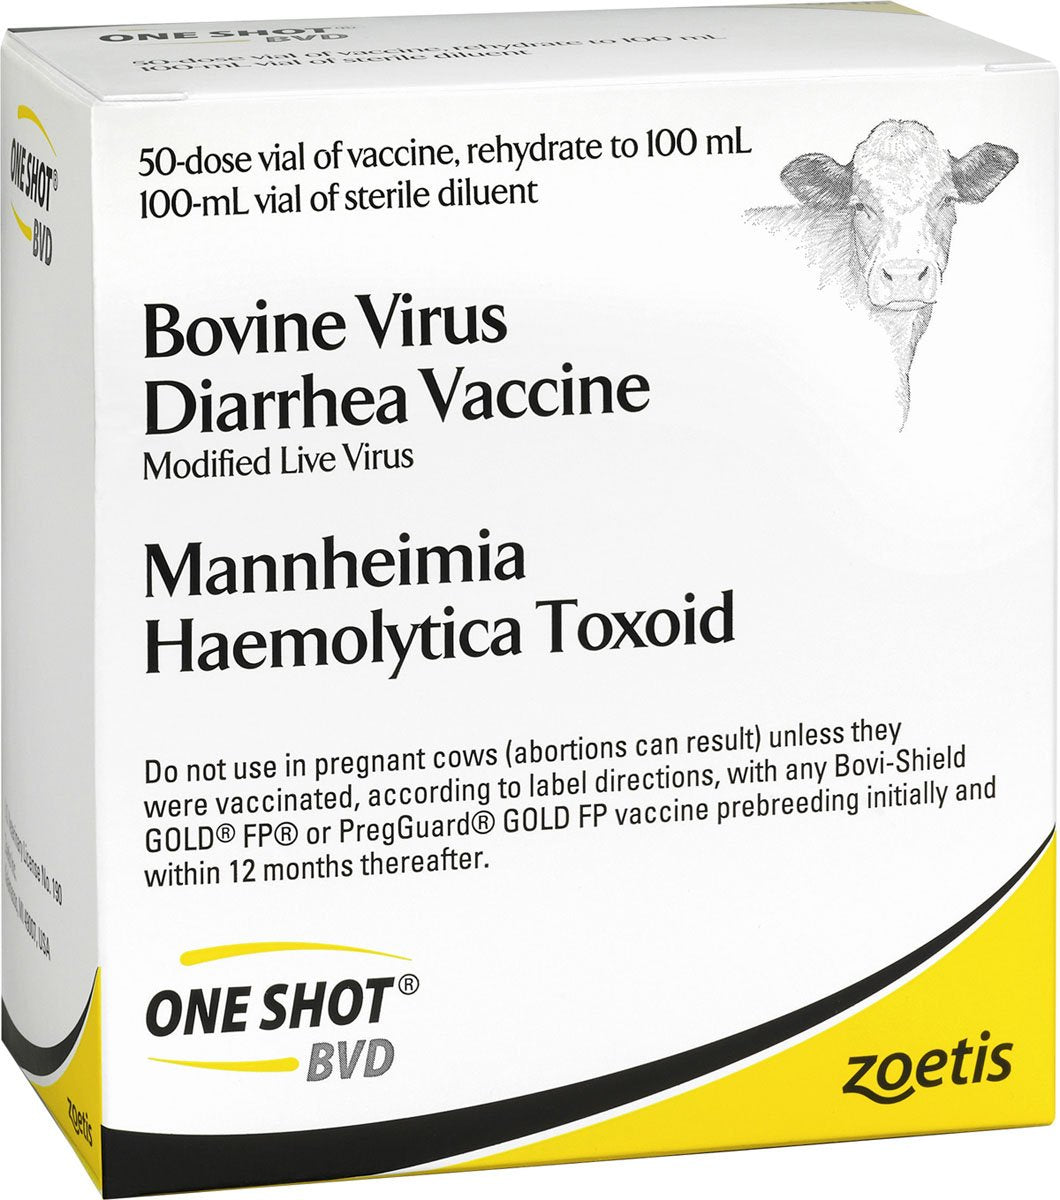 Zoetis ONE SHOT BVD - Animal Health Express